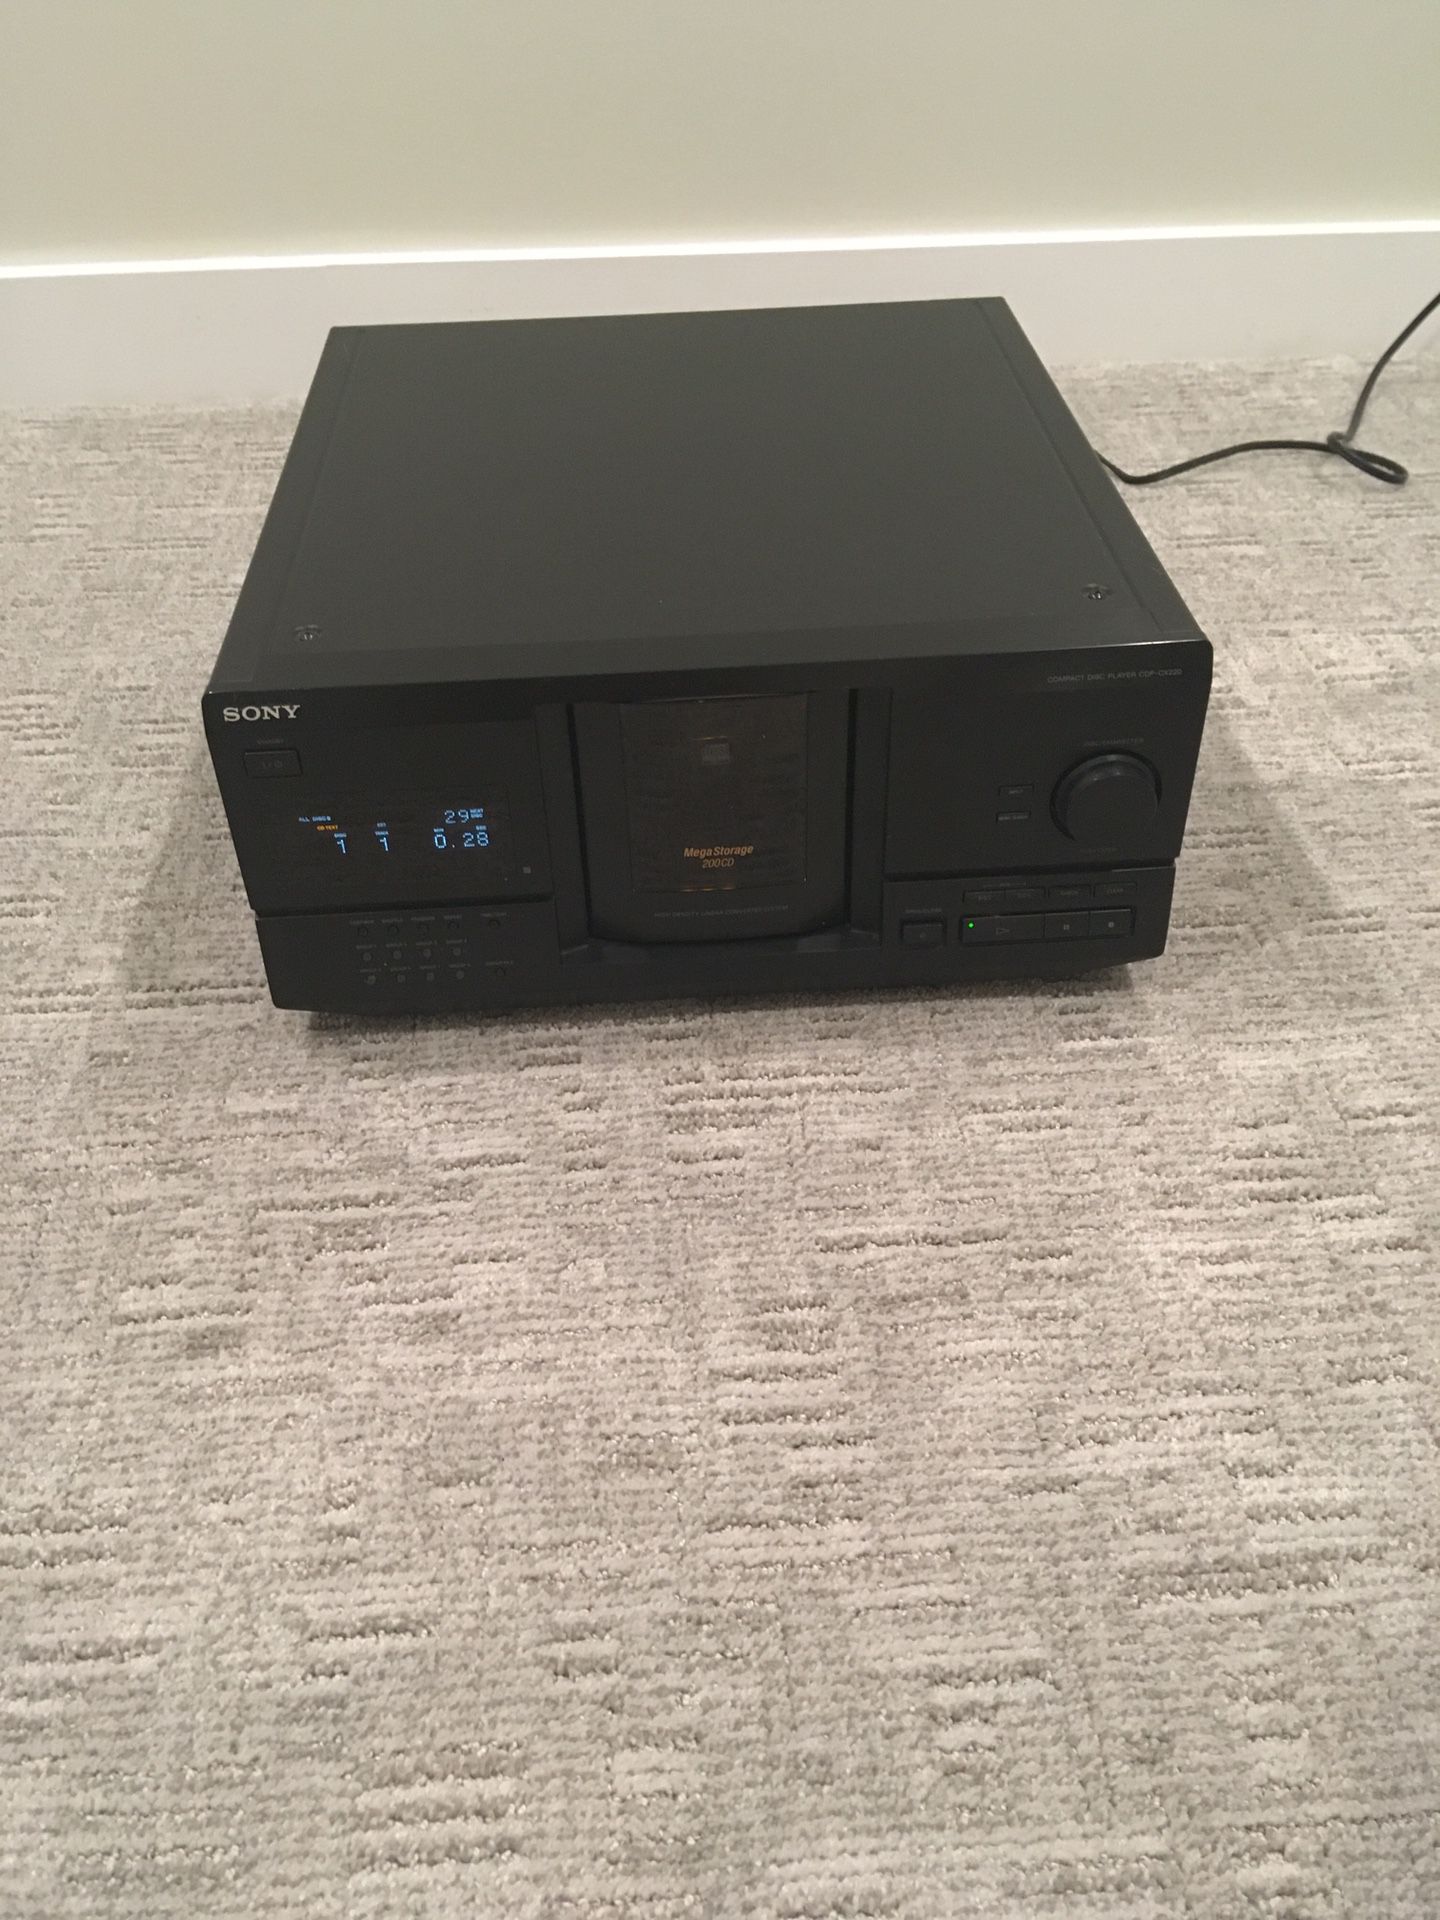 Sony CDP-CX220 CD player